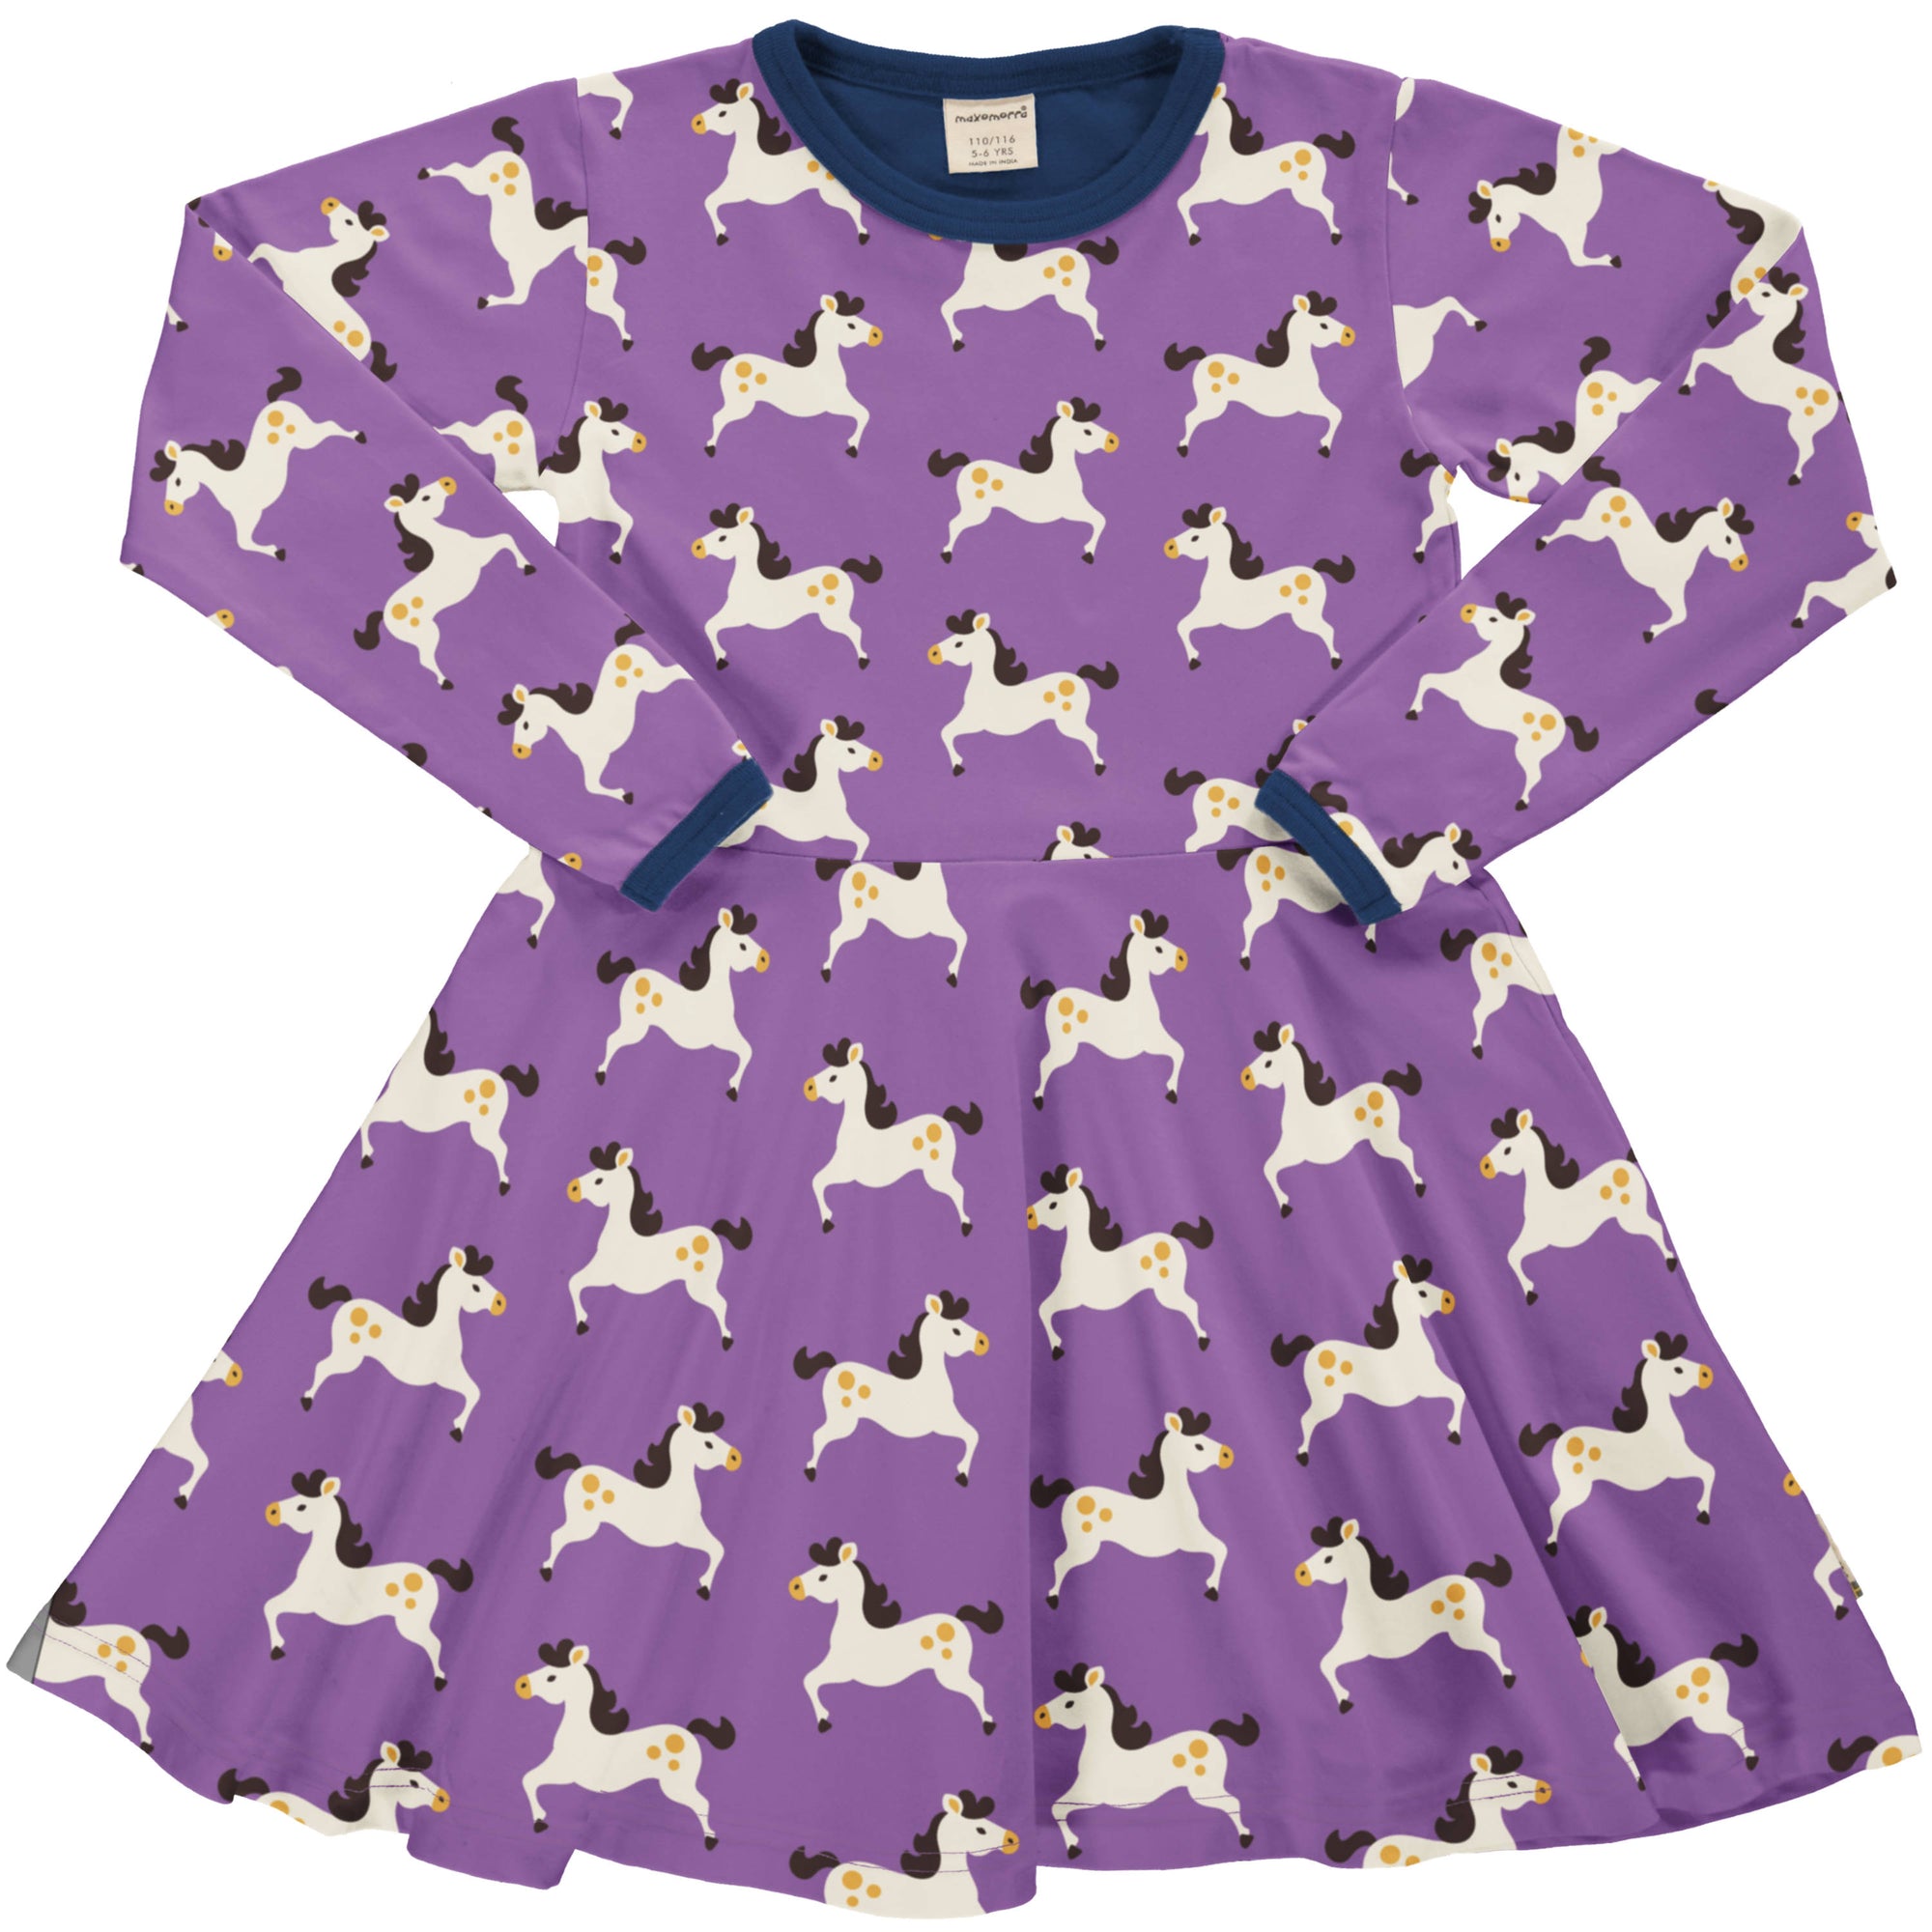 Maxomorra Horse Circle Dress Aw23purple Clothing 3-4YRS / Purple,5-6YRS / Purple,7-8YRS / Purple,9-10YRS / Purple,1-2 YRS / Purple